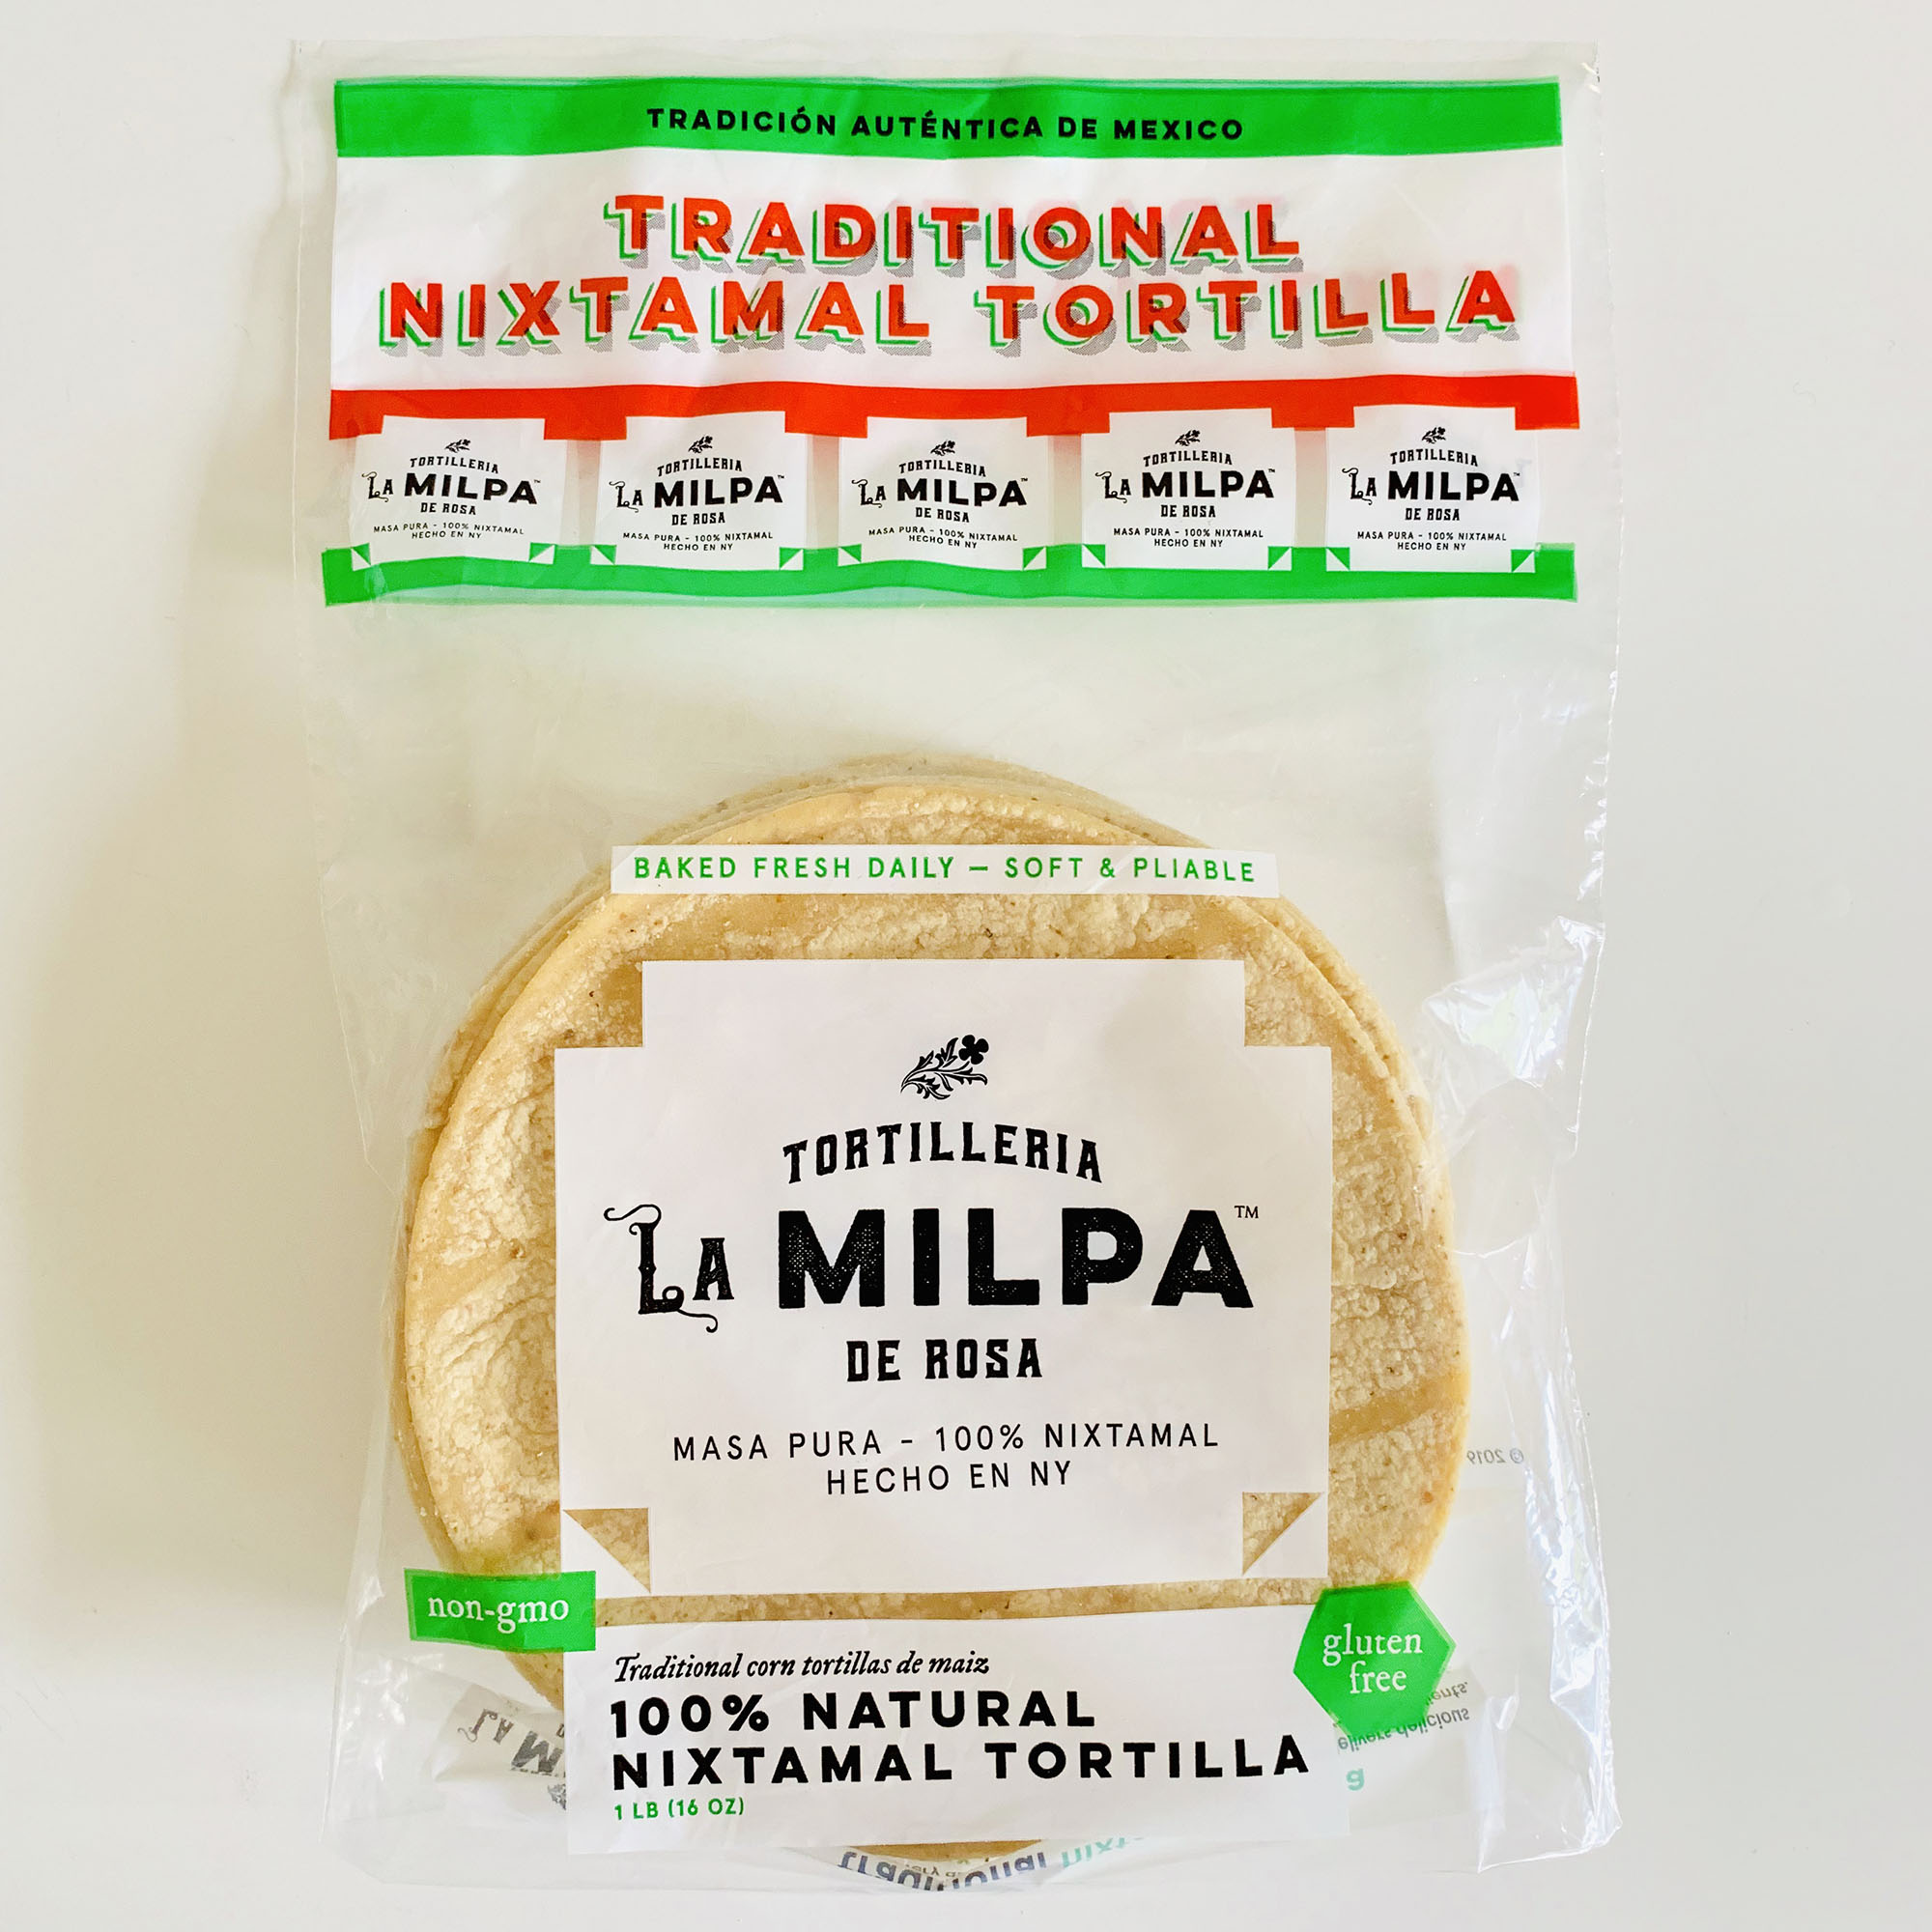  The best traditional nixtamal tortillas are La Milpa tortillas 